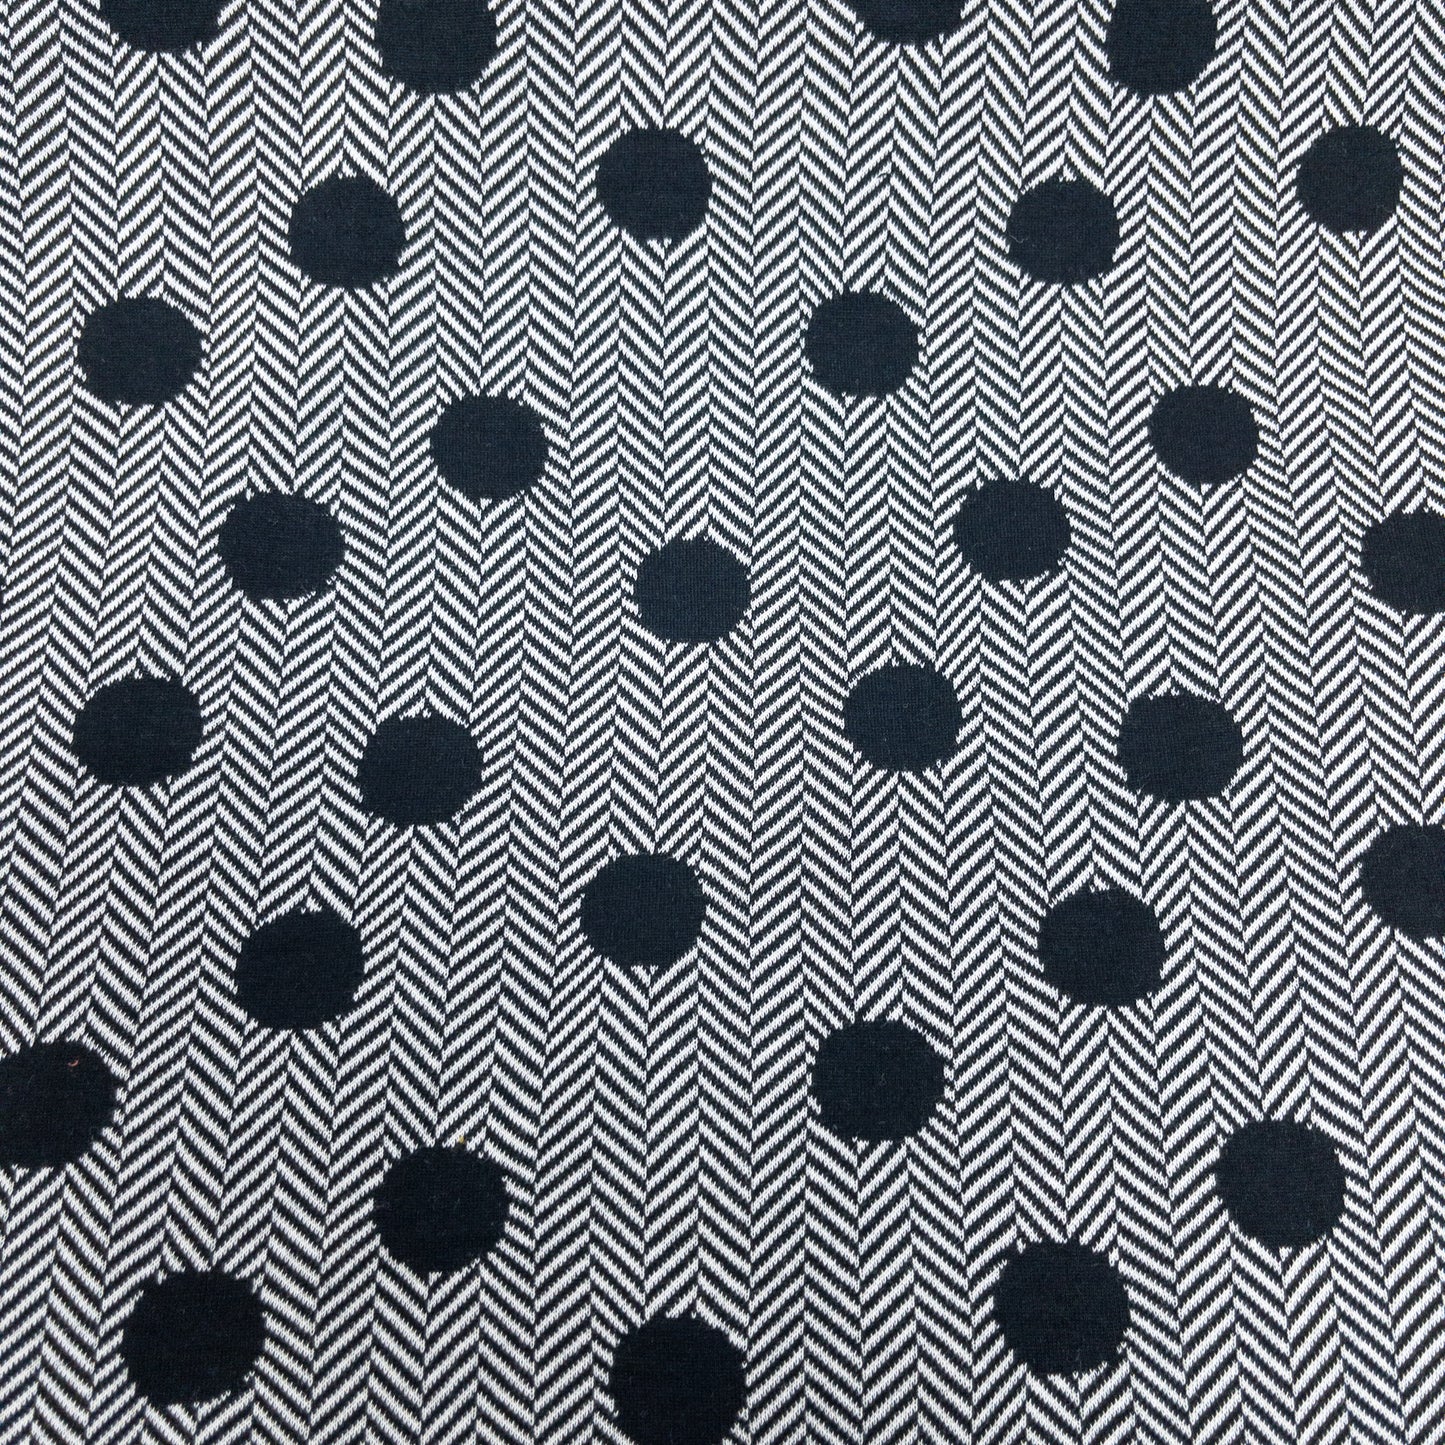 maffon | tweed dot black ivory 花呢圓點 黑+米色 | cotton jacquard knit 雙面純棉提花針織 - 160cm